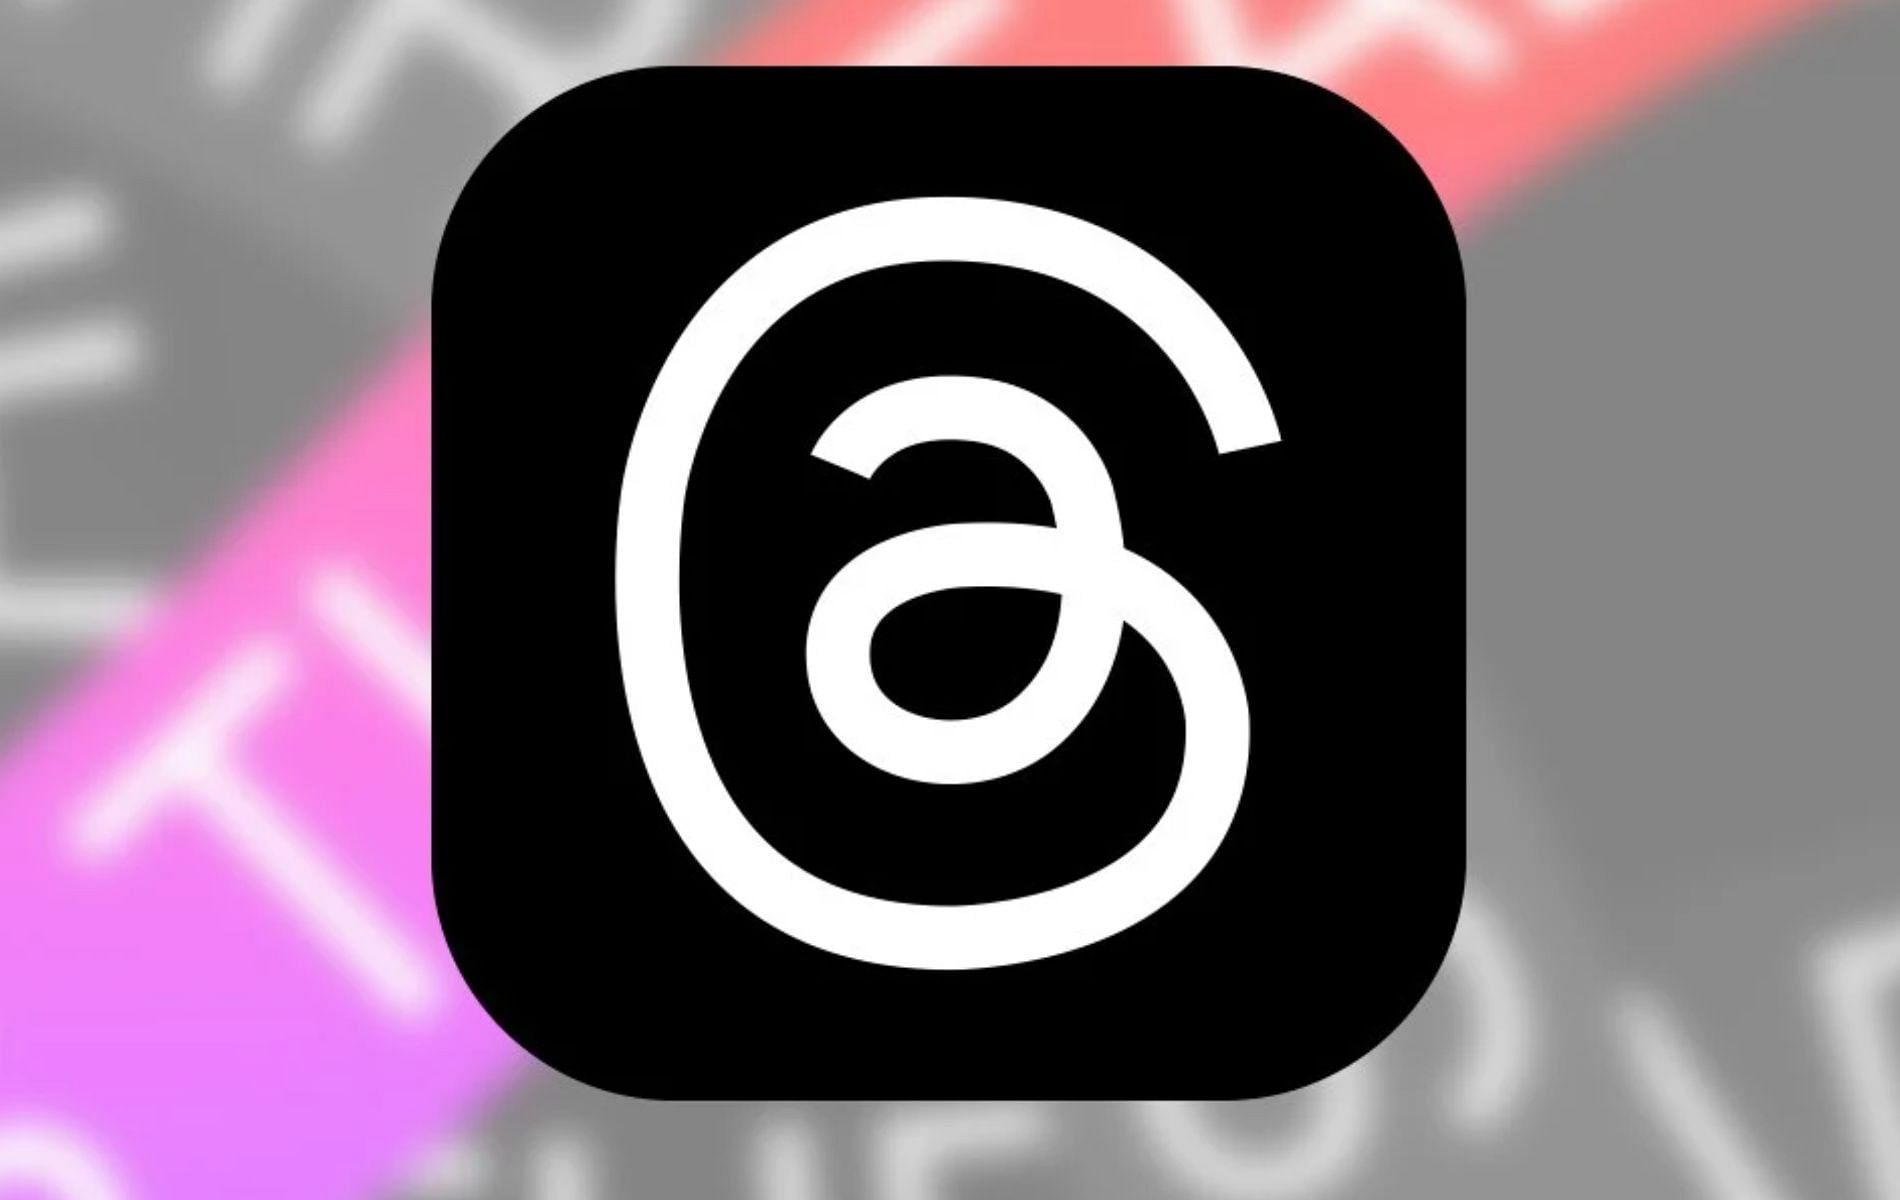 Official Threads app logo